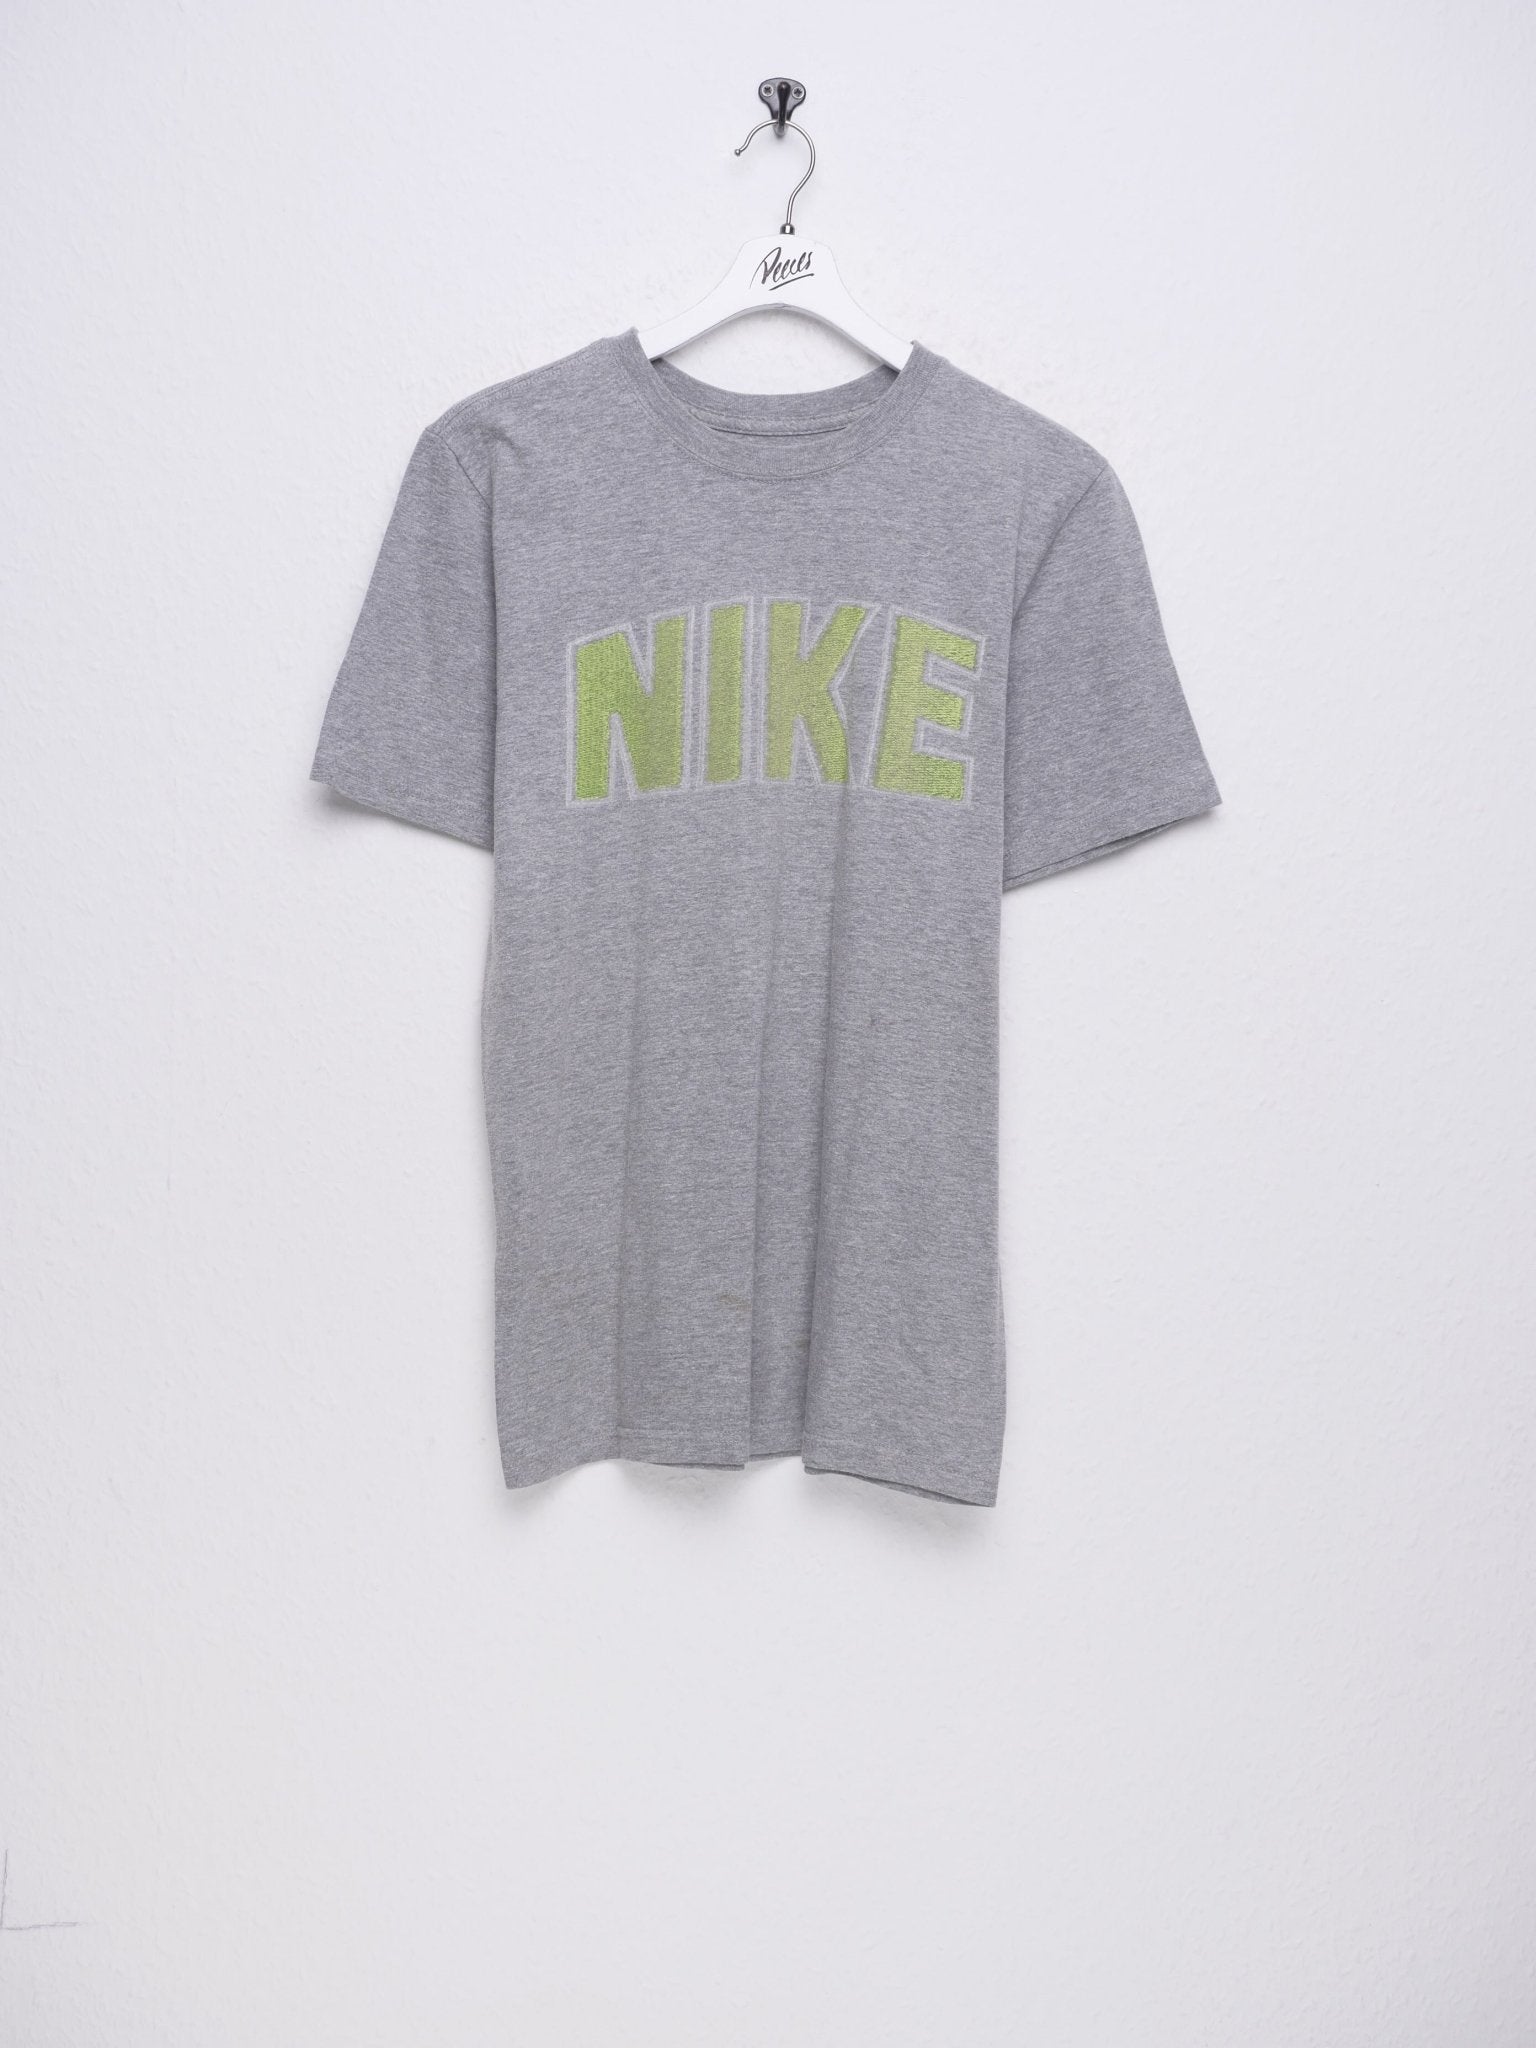 Nike printed Logo Shirt - Peeces